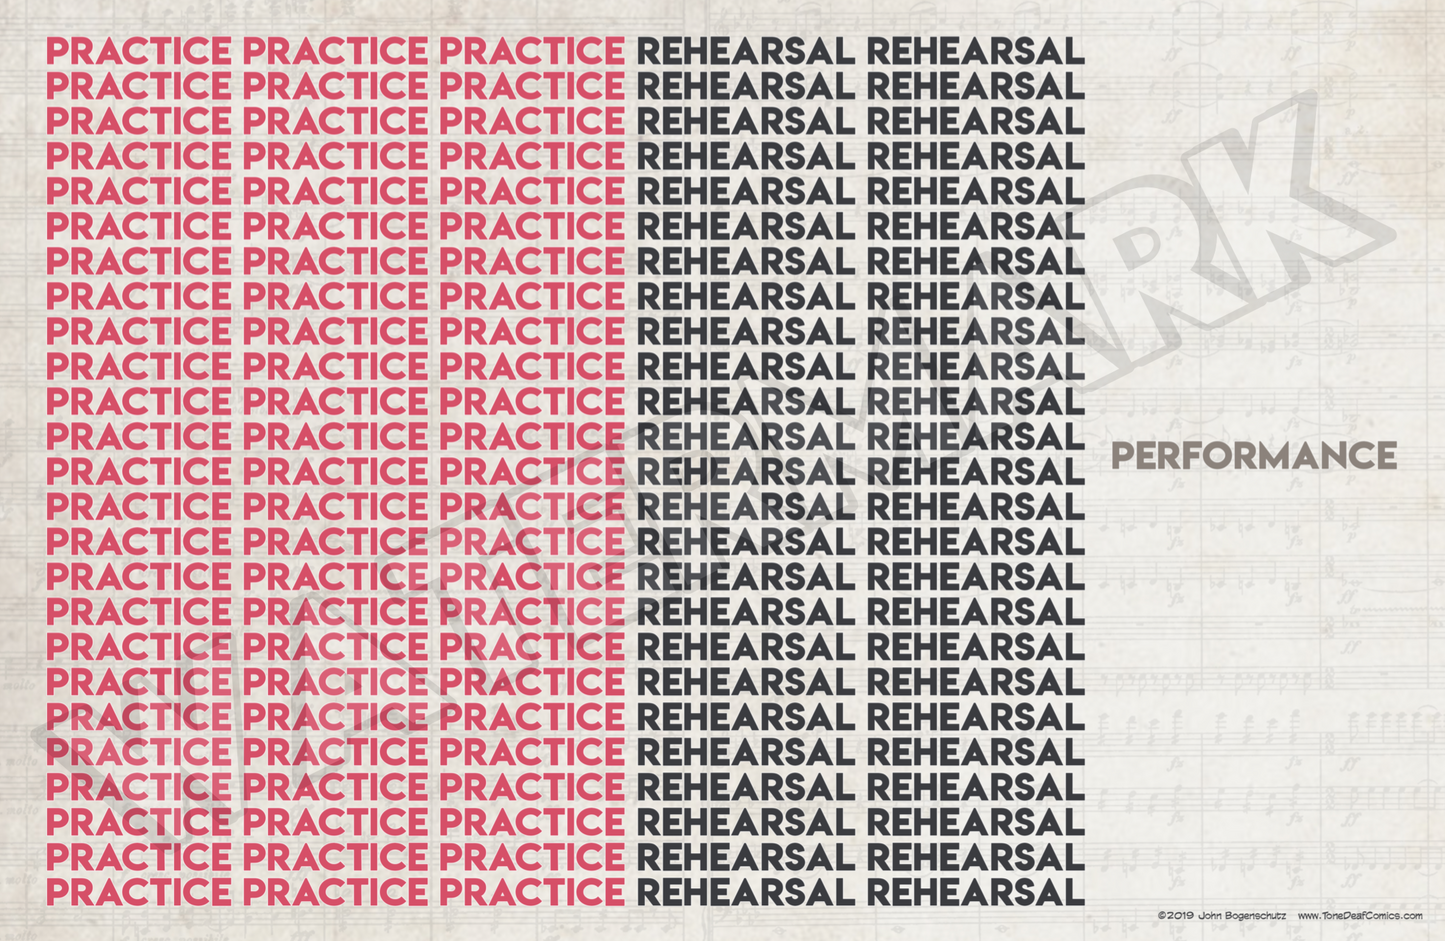 Practice Rehearsal Performance